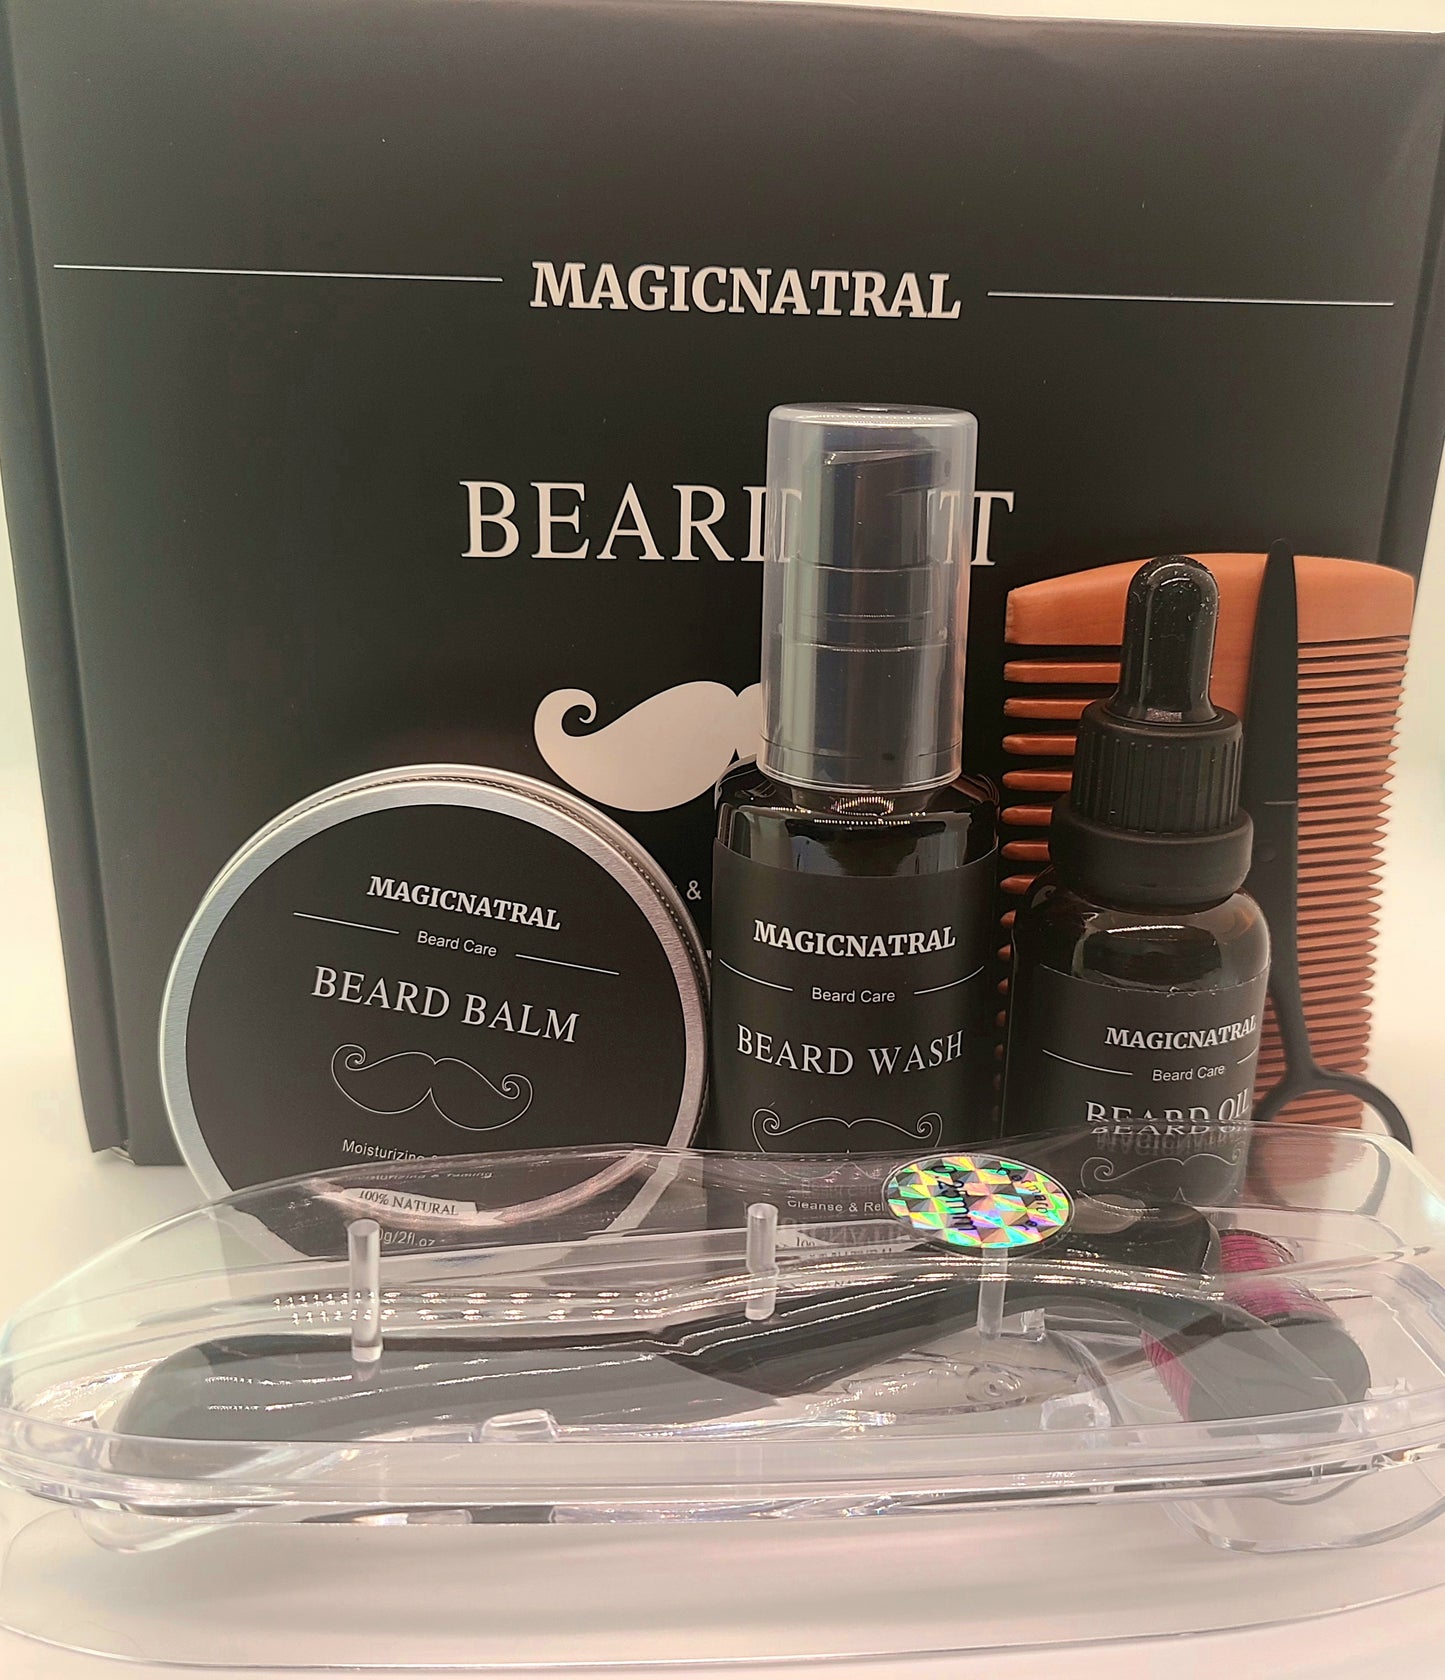 Beard growth kit